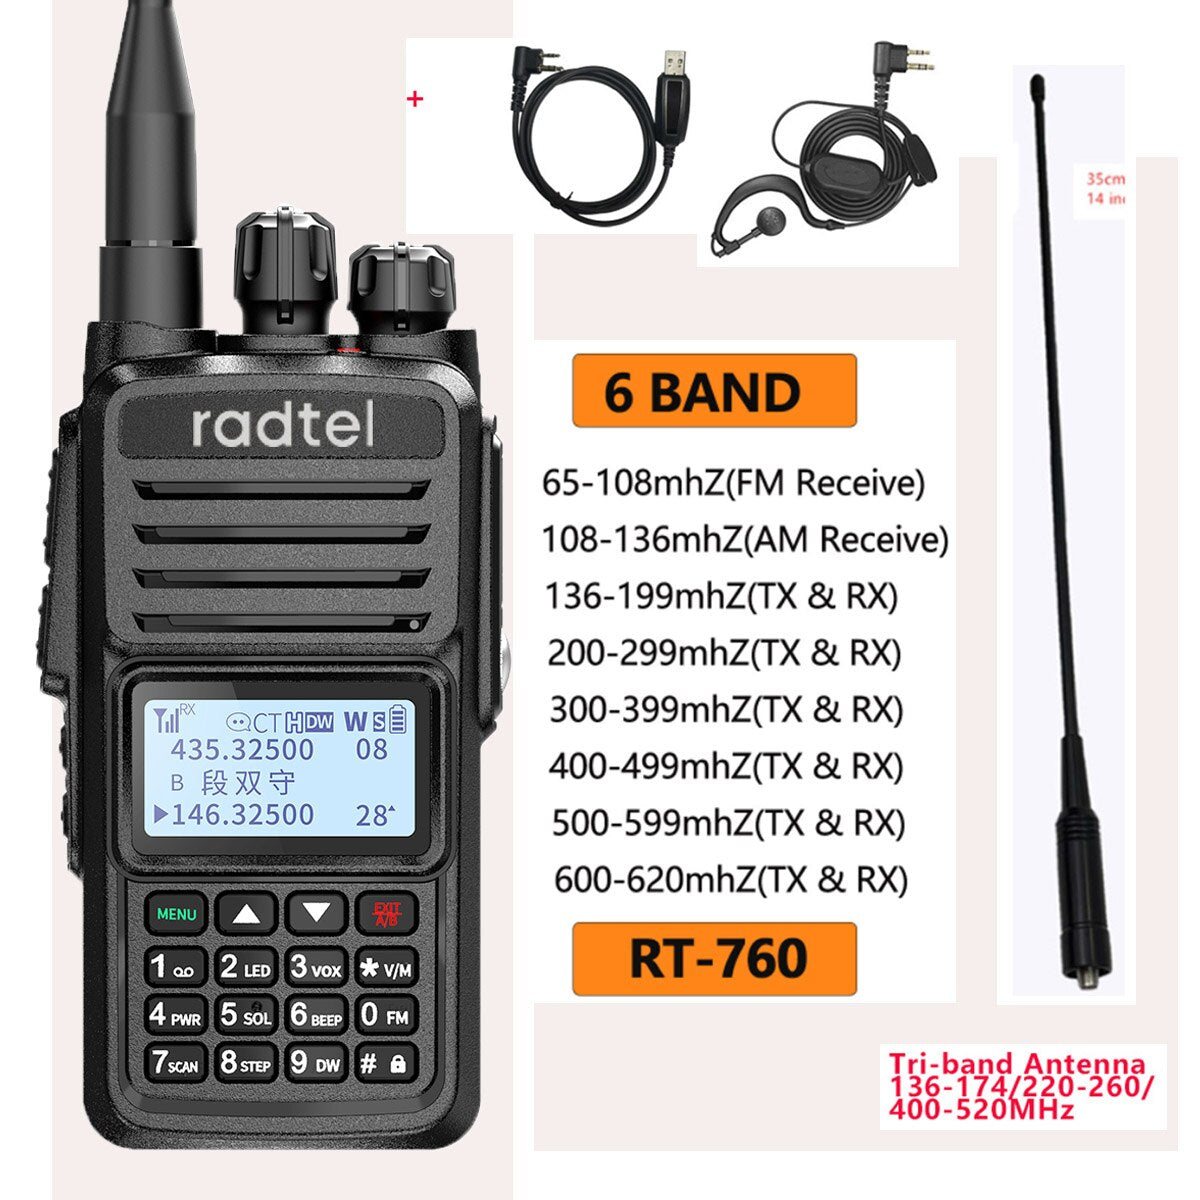 Radtel RT-760 Full Band Ham Radio 136-620Mhz Aviation frequency Receive Am FM Portable Two-Way Radio Station UHF VHF Transceiver